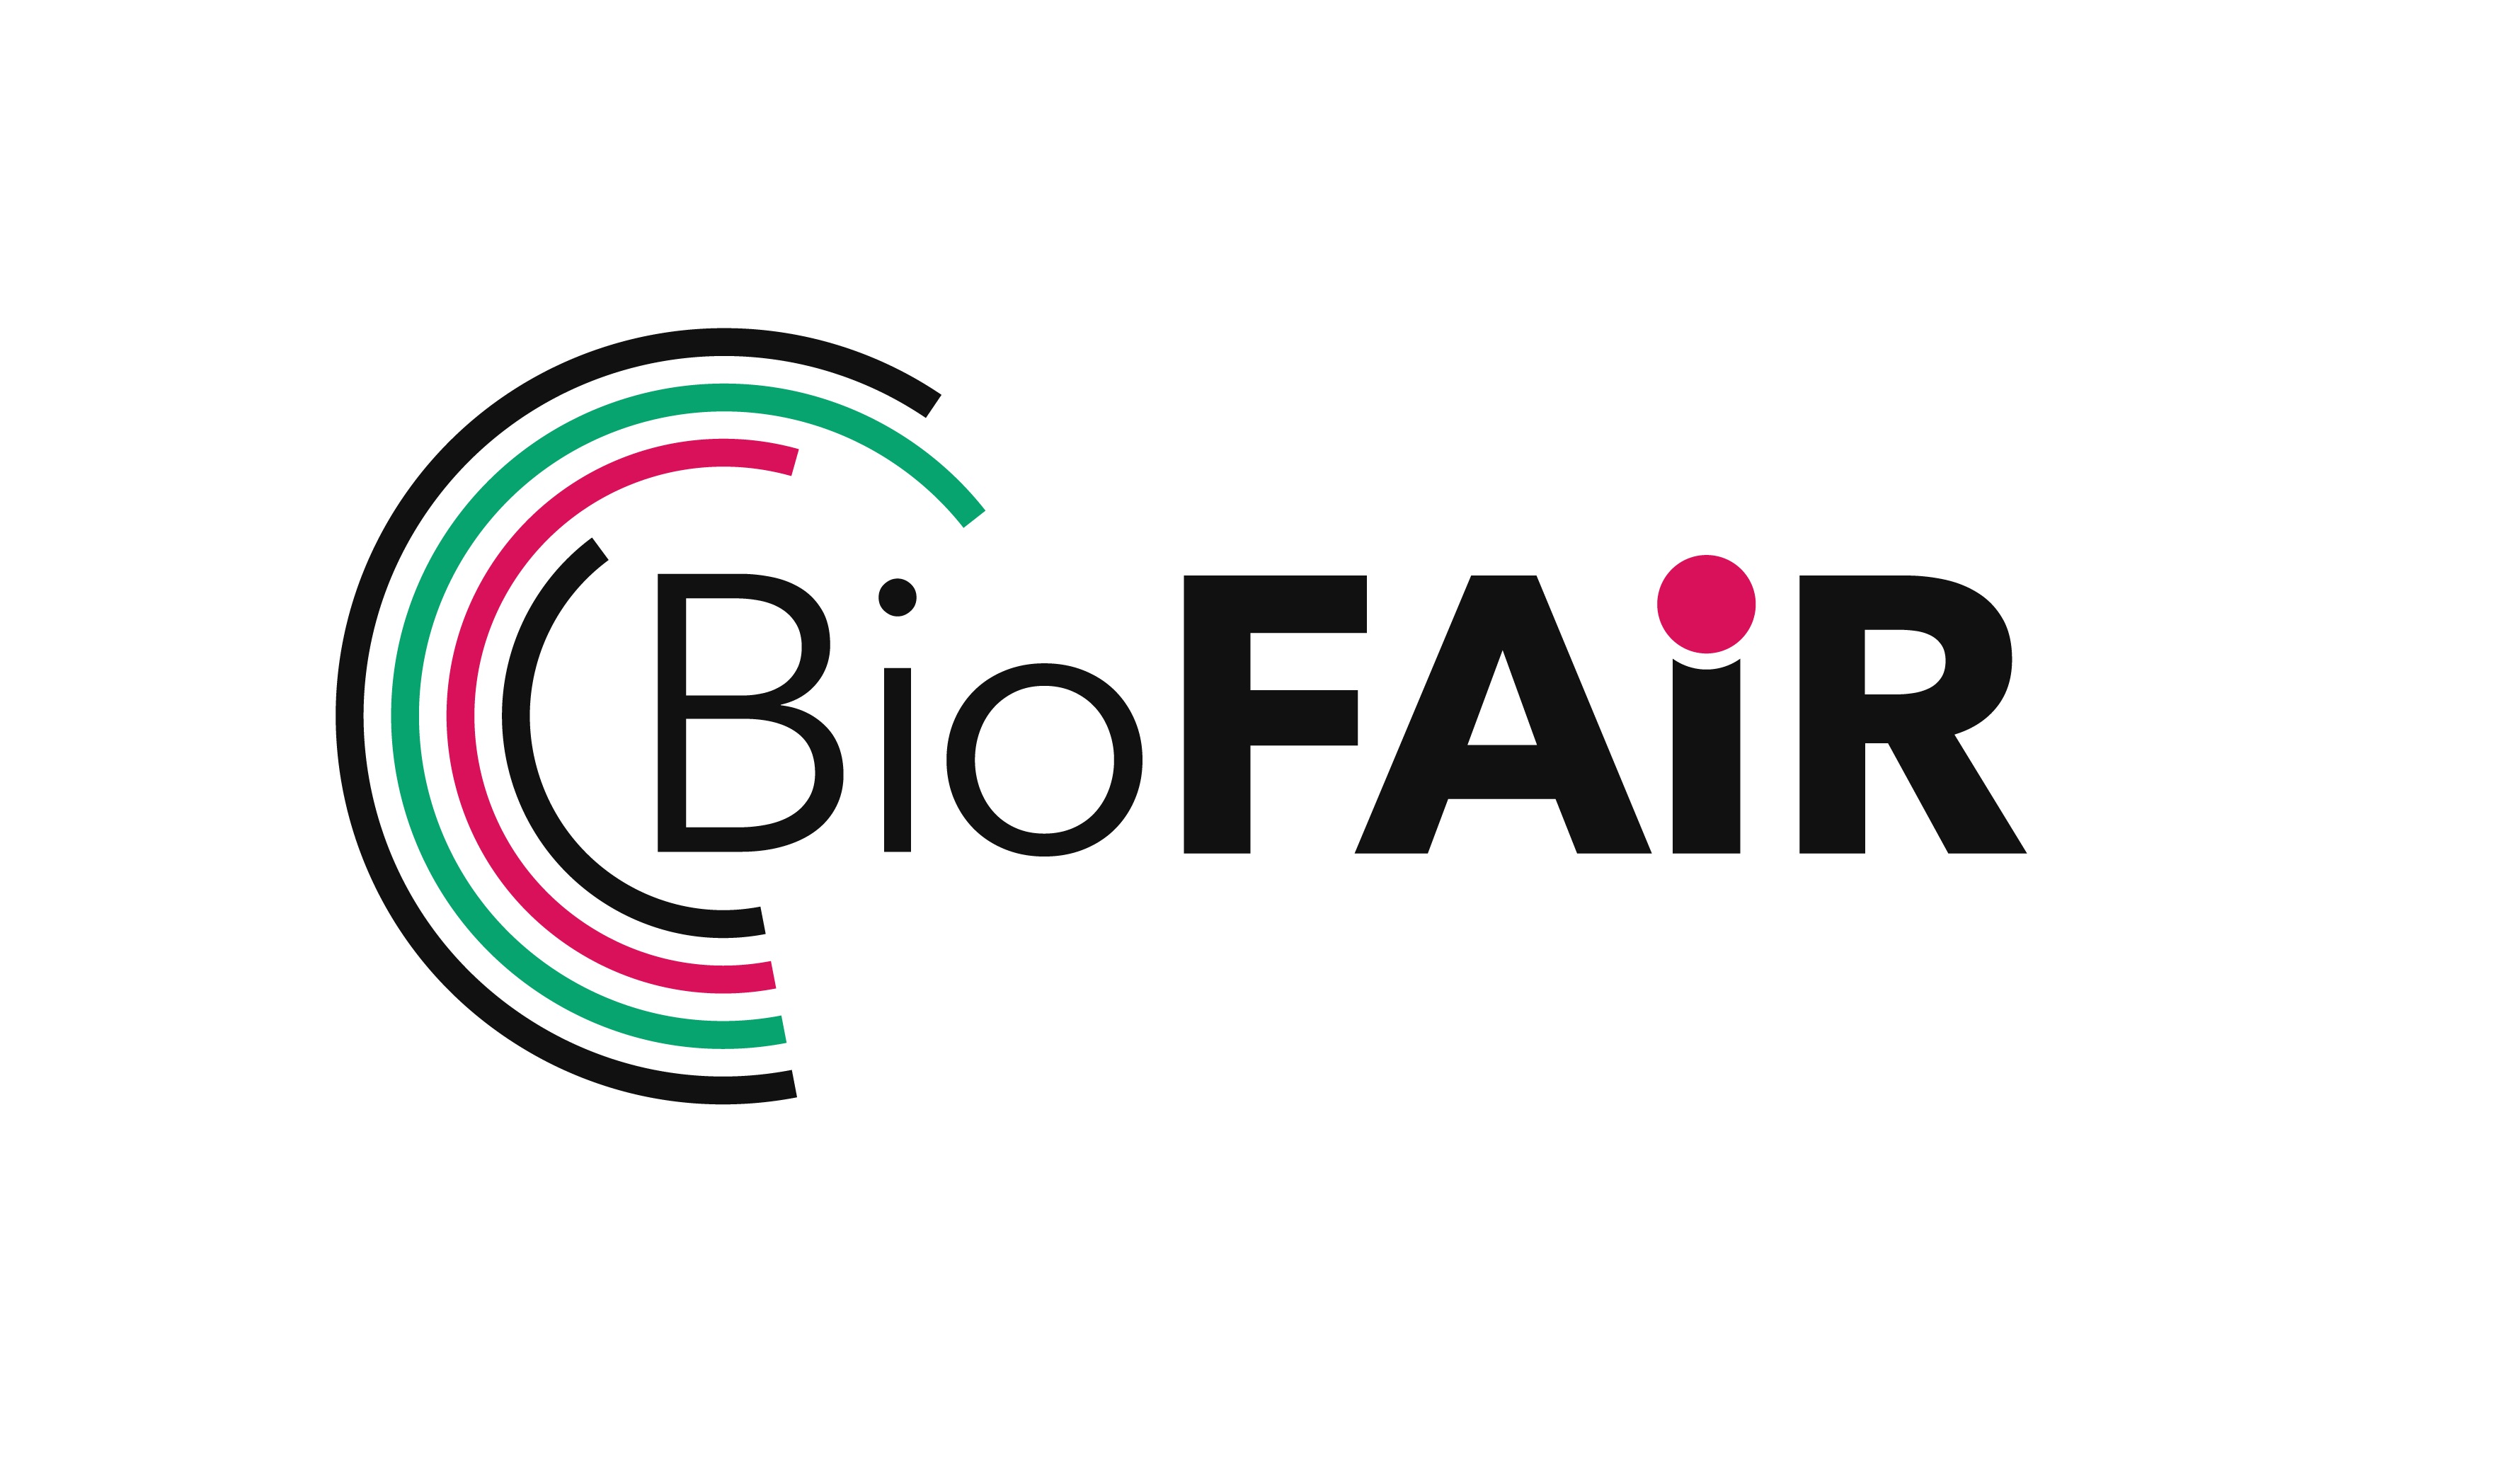 BioFAIR logo